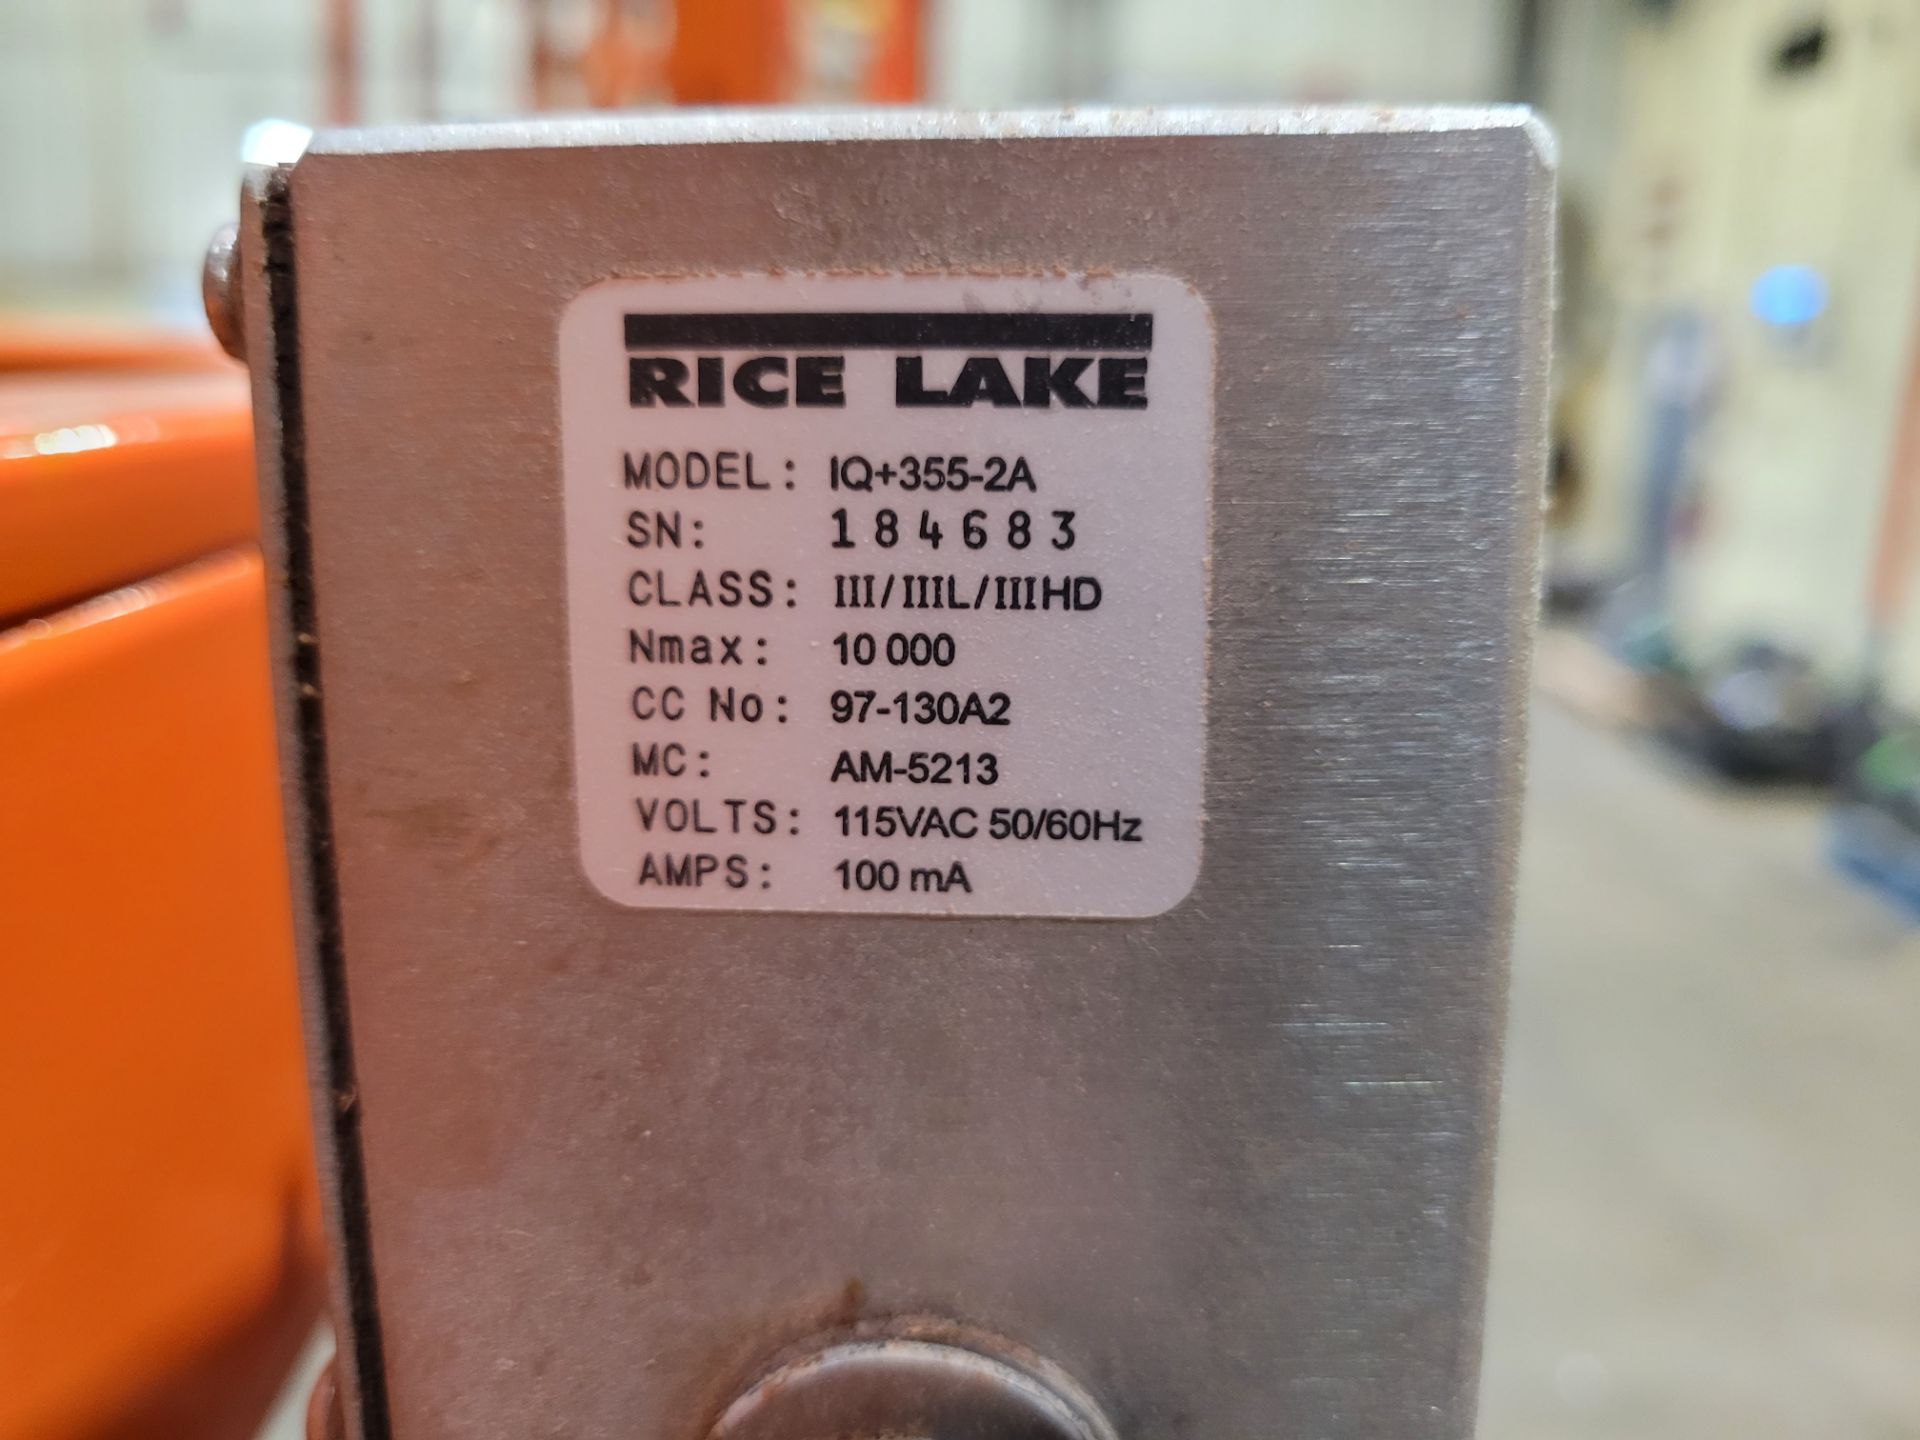 RICE LAKE digital platform scale, 2500kg cap, 2x2, mod. IQ+335-2A, ser. 184683 - Image 5 of 7